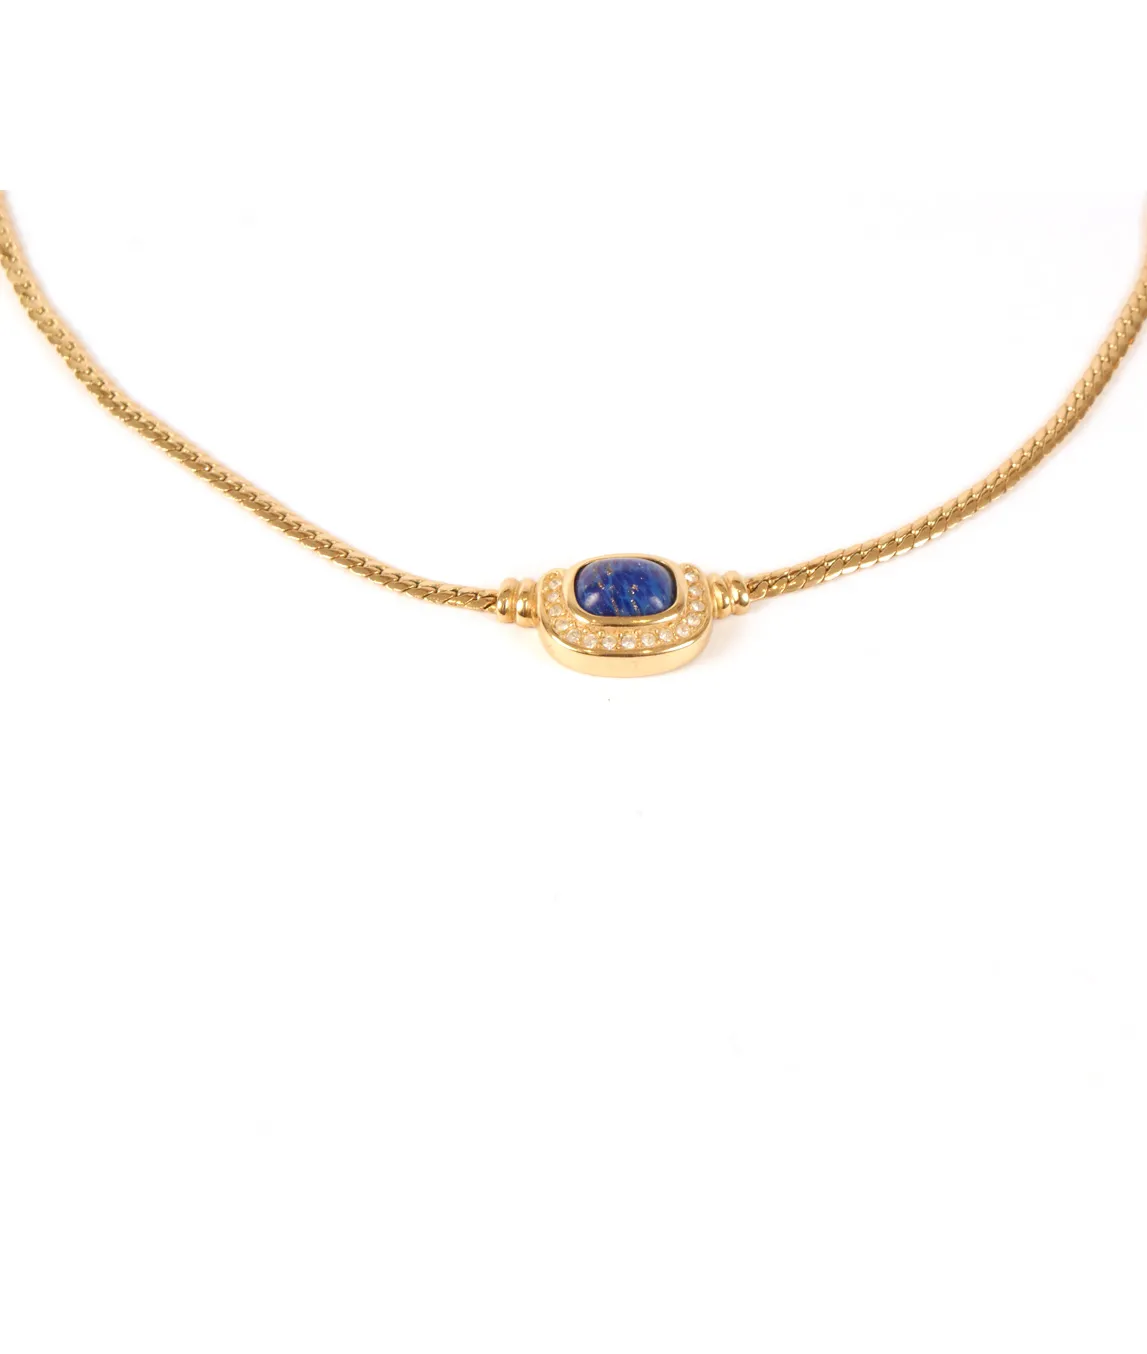 Christian Dior necklace lapis lazuli stone